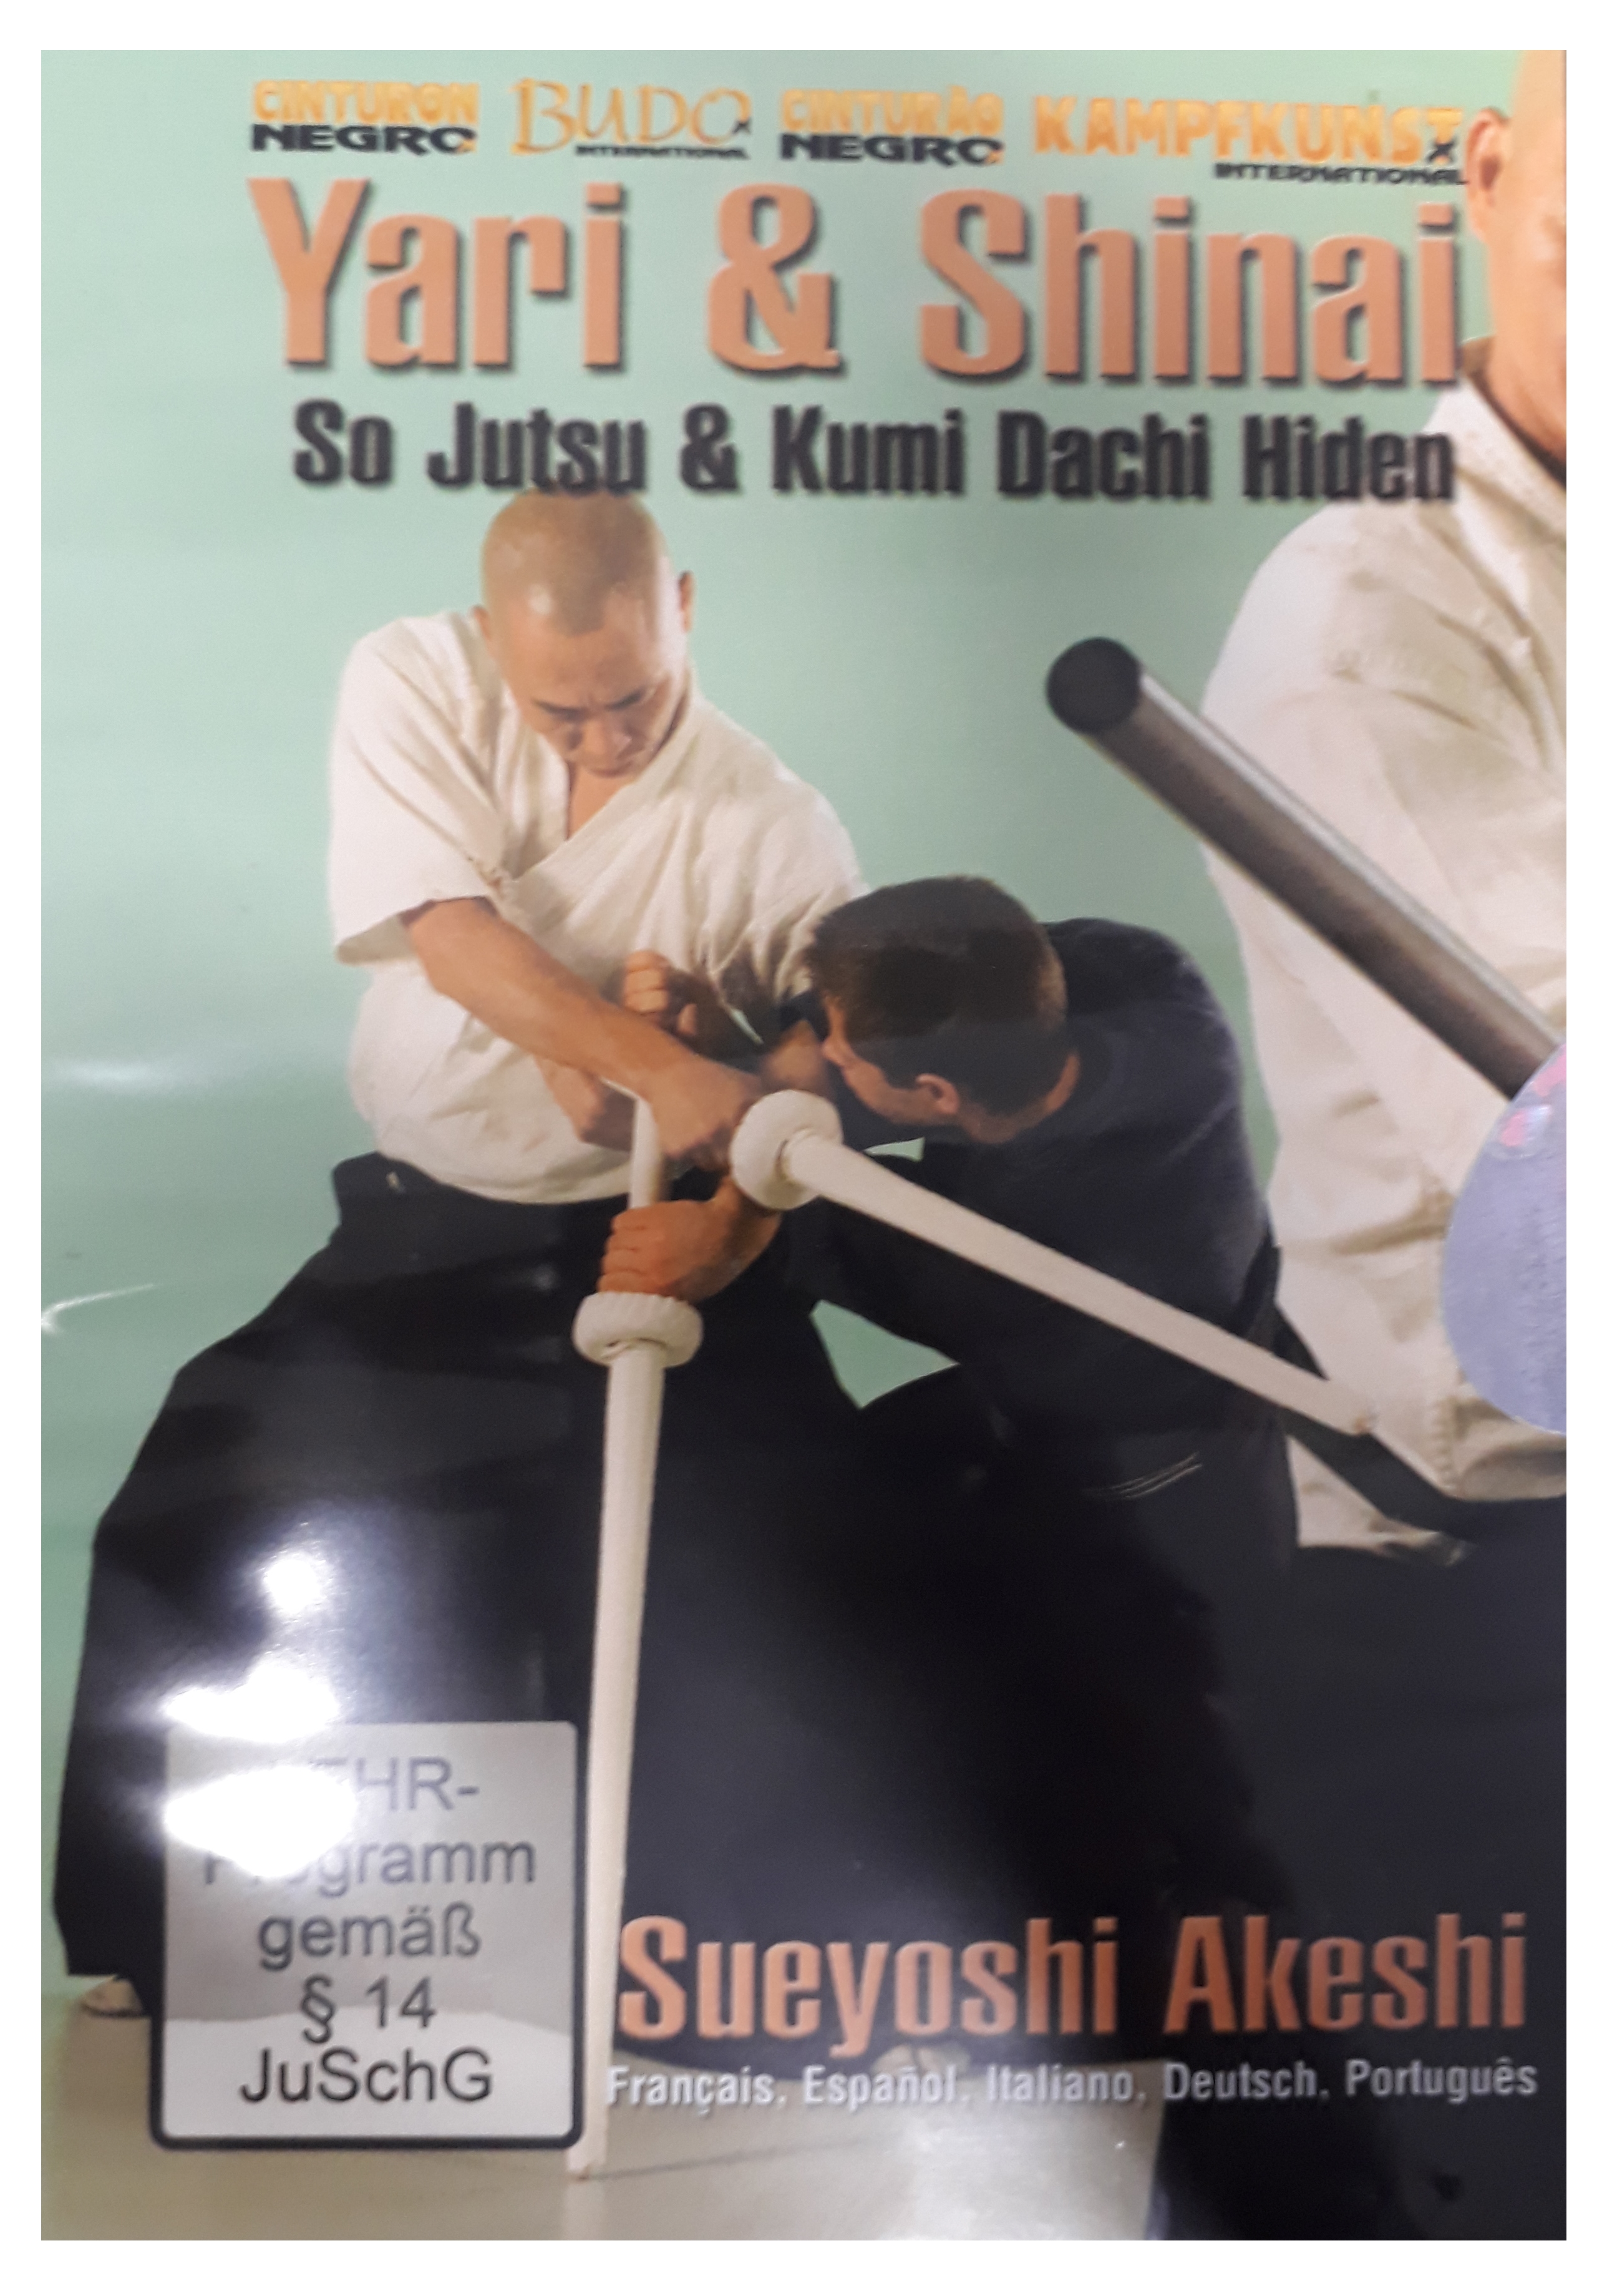 DVD Yari & Shinai - So Jutsu & Kumi Dachi Hiden